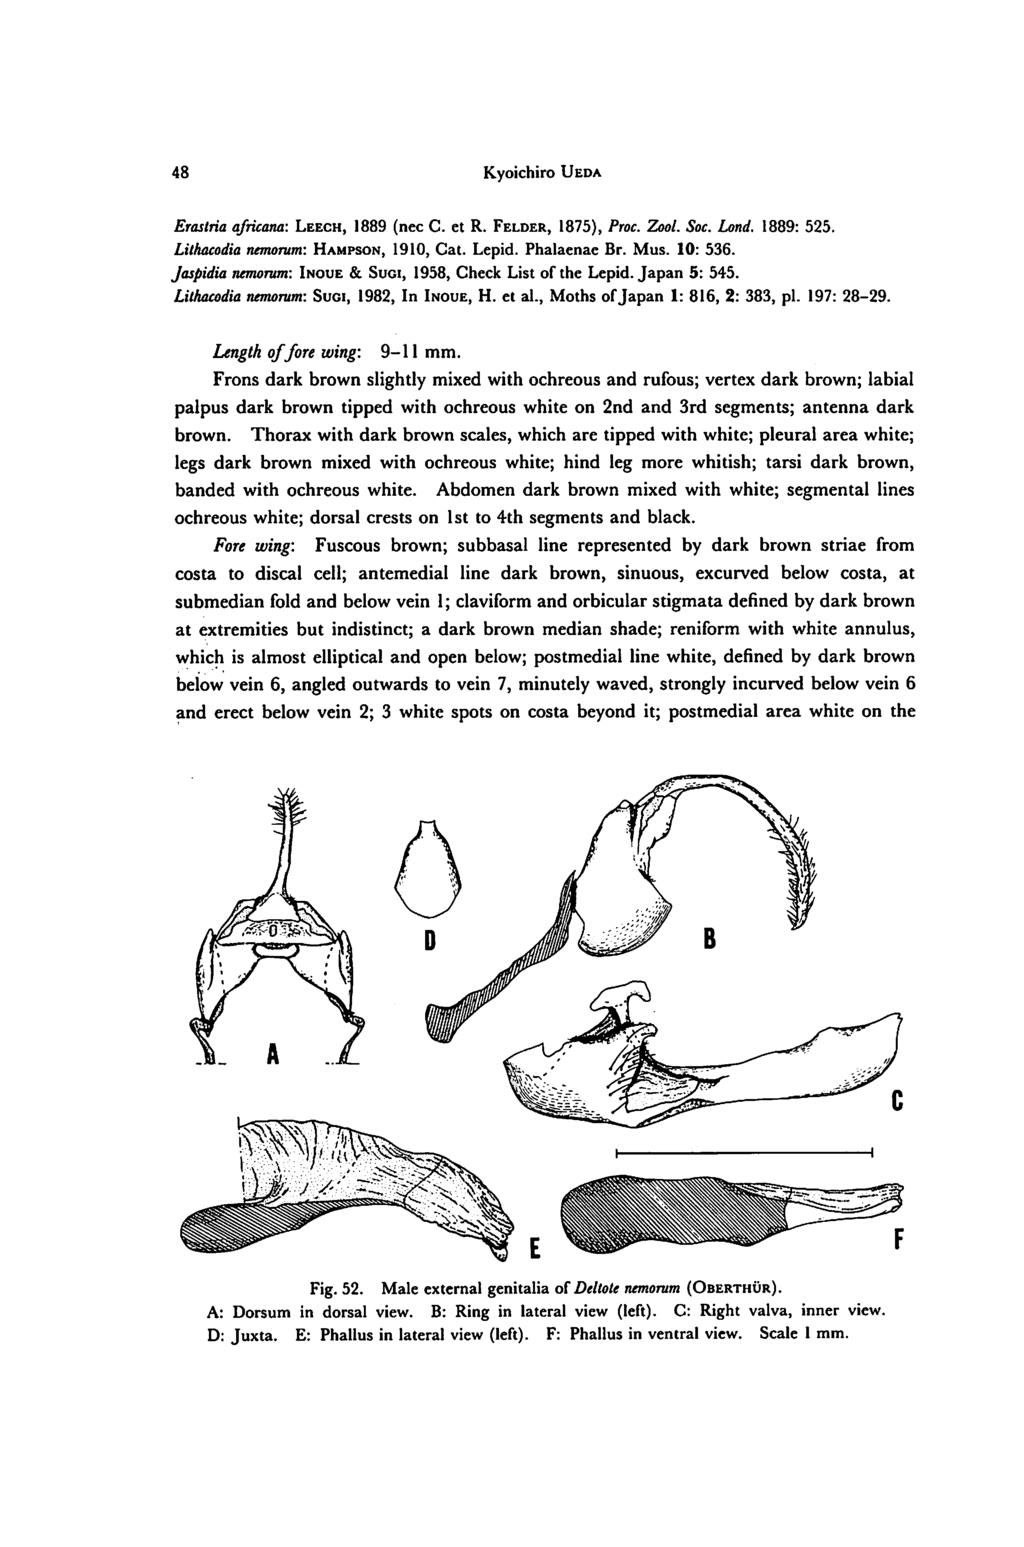 48 Kyoichiro Ueda Erastria africana: Leech, 1889 (nee C. et R. Felder, 1875), Proc. Zool. Soc. Land. 1889: 525. Lithacodia nemorum: Hampson, 1910, Cat. Lepid. Phalaenae Br. Mus. 10: 536.